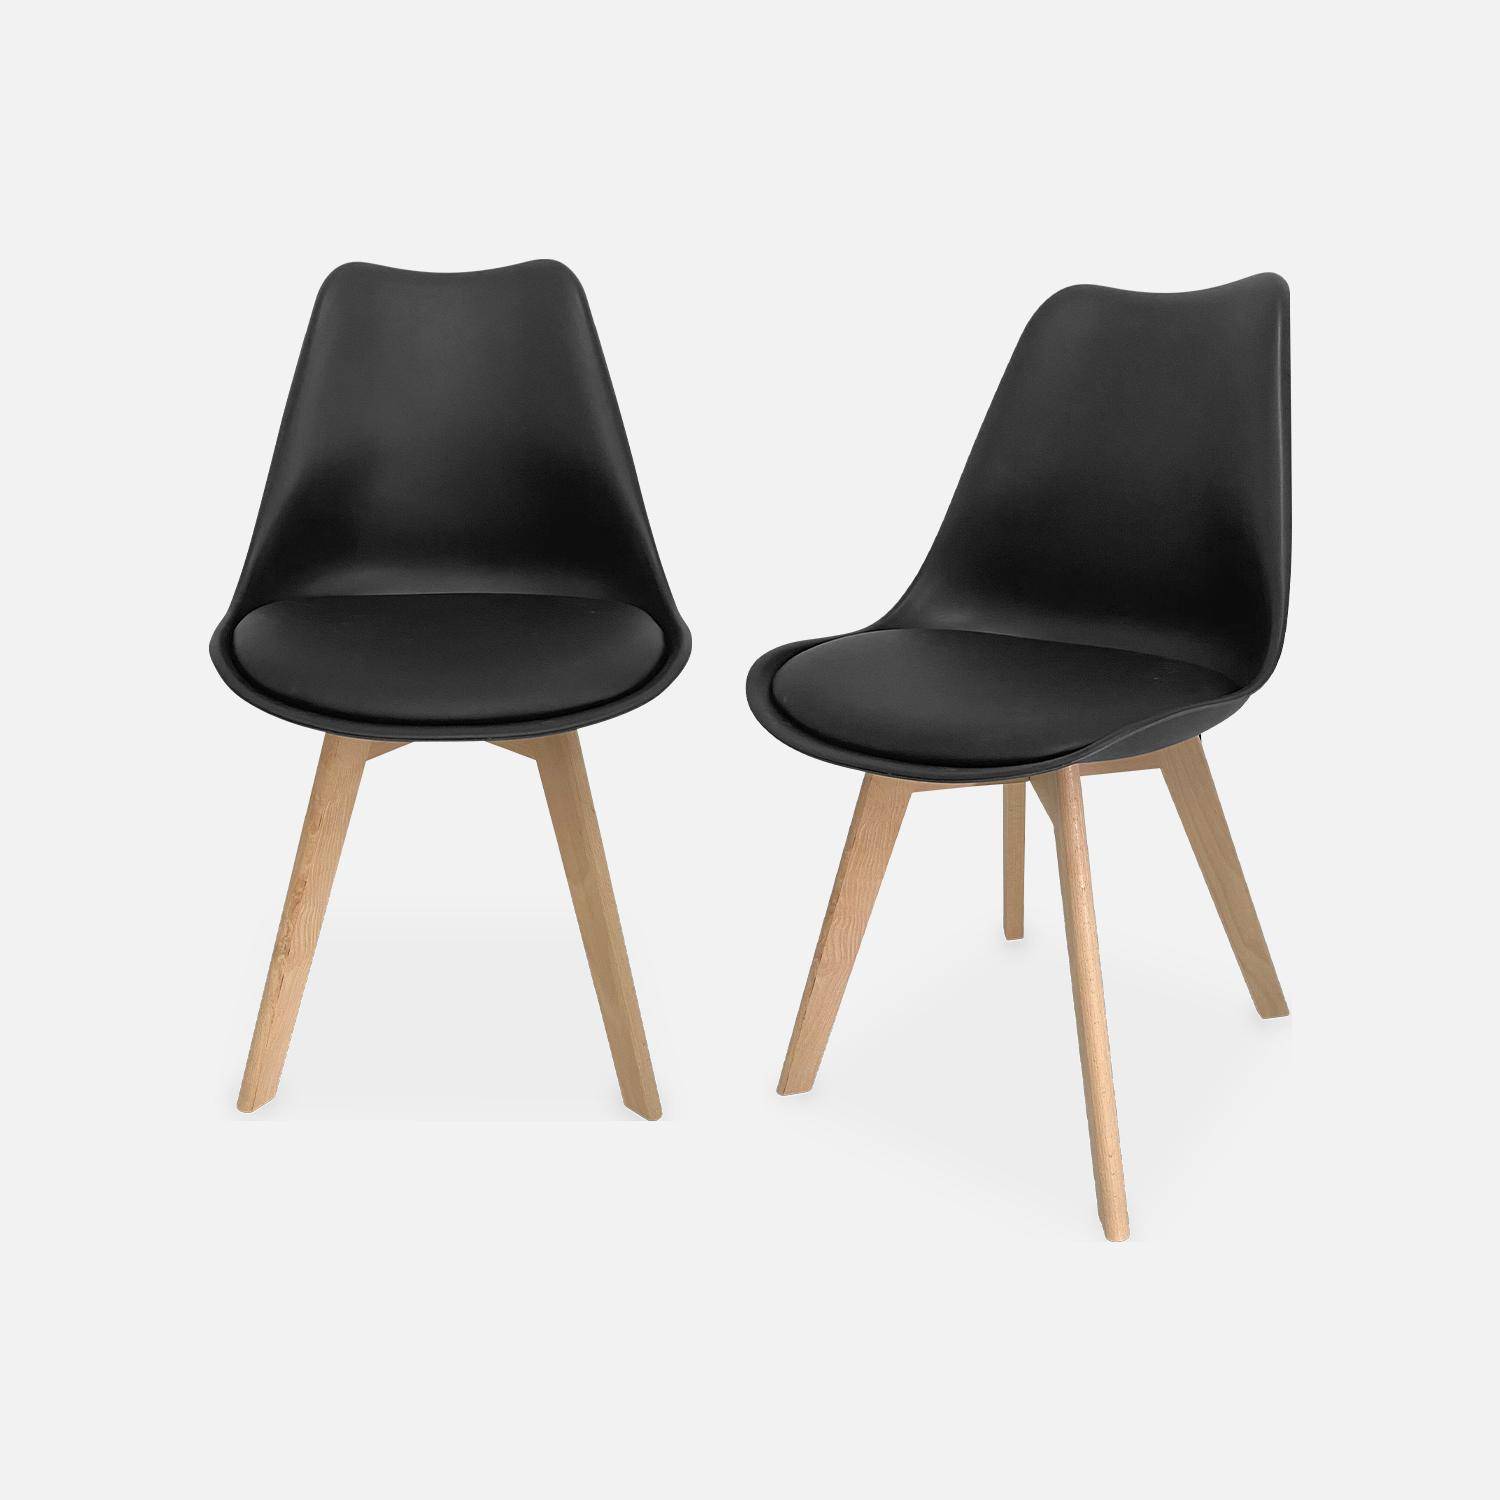 Pair of scandi-style dining chairs, black, L49xD55xH81cm, NILS,sweeek,Photo1